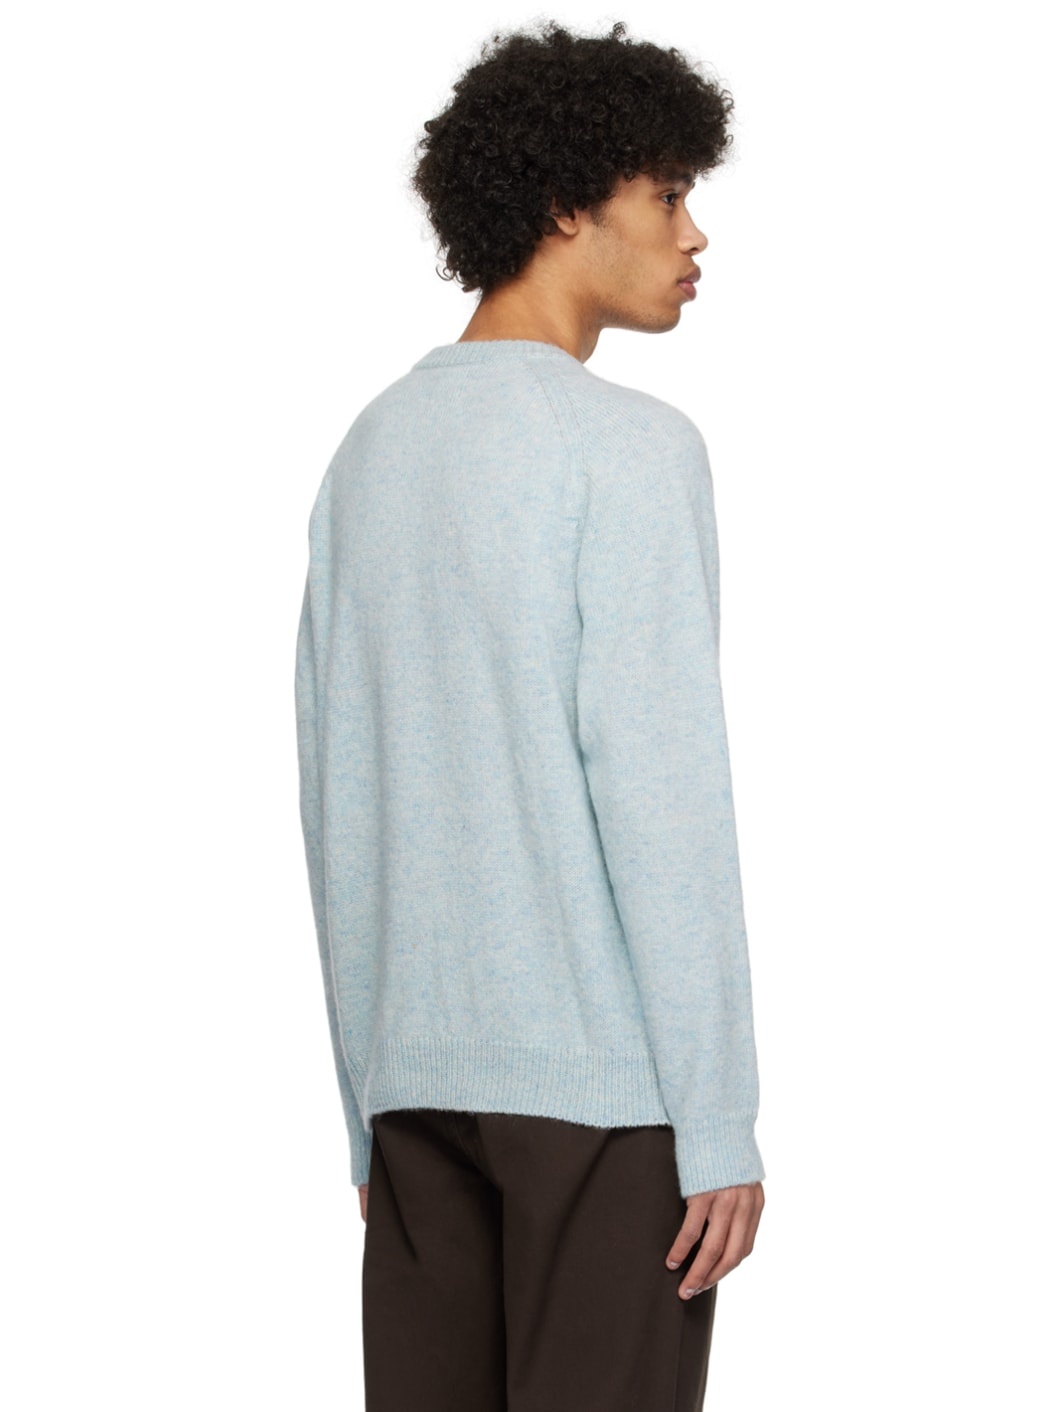 Blue Argyle Sweater - 3